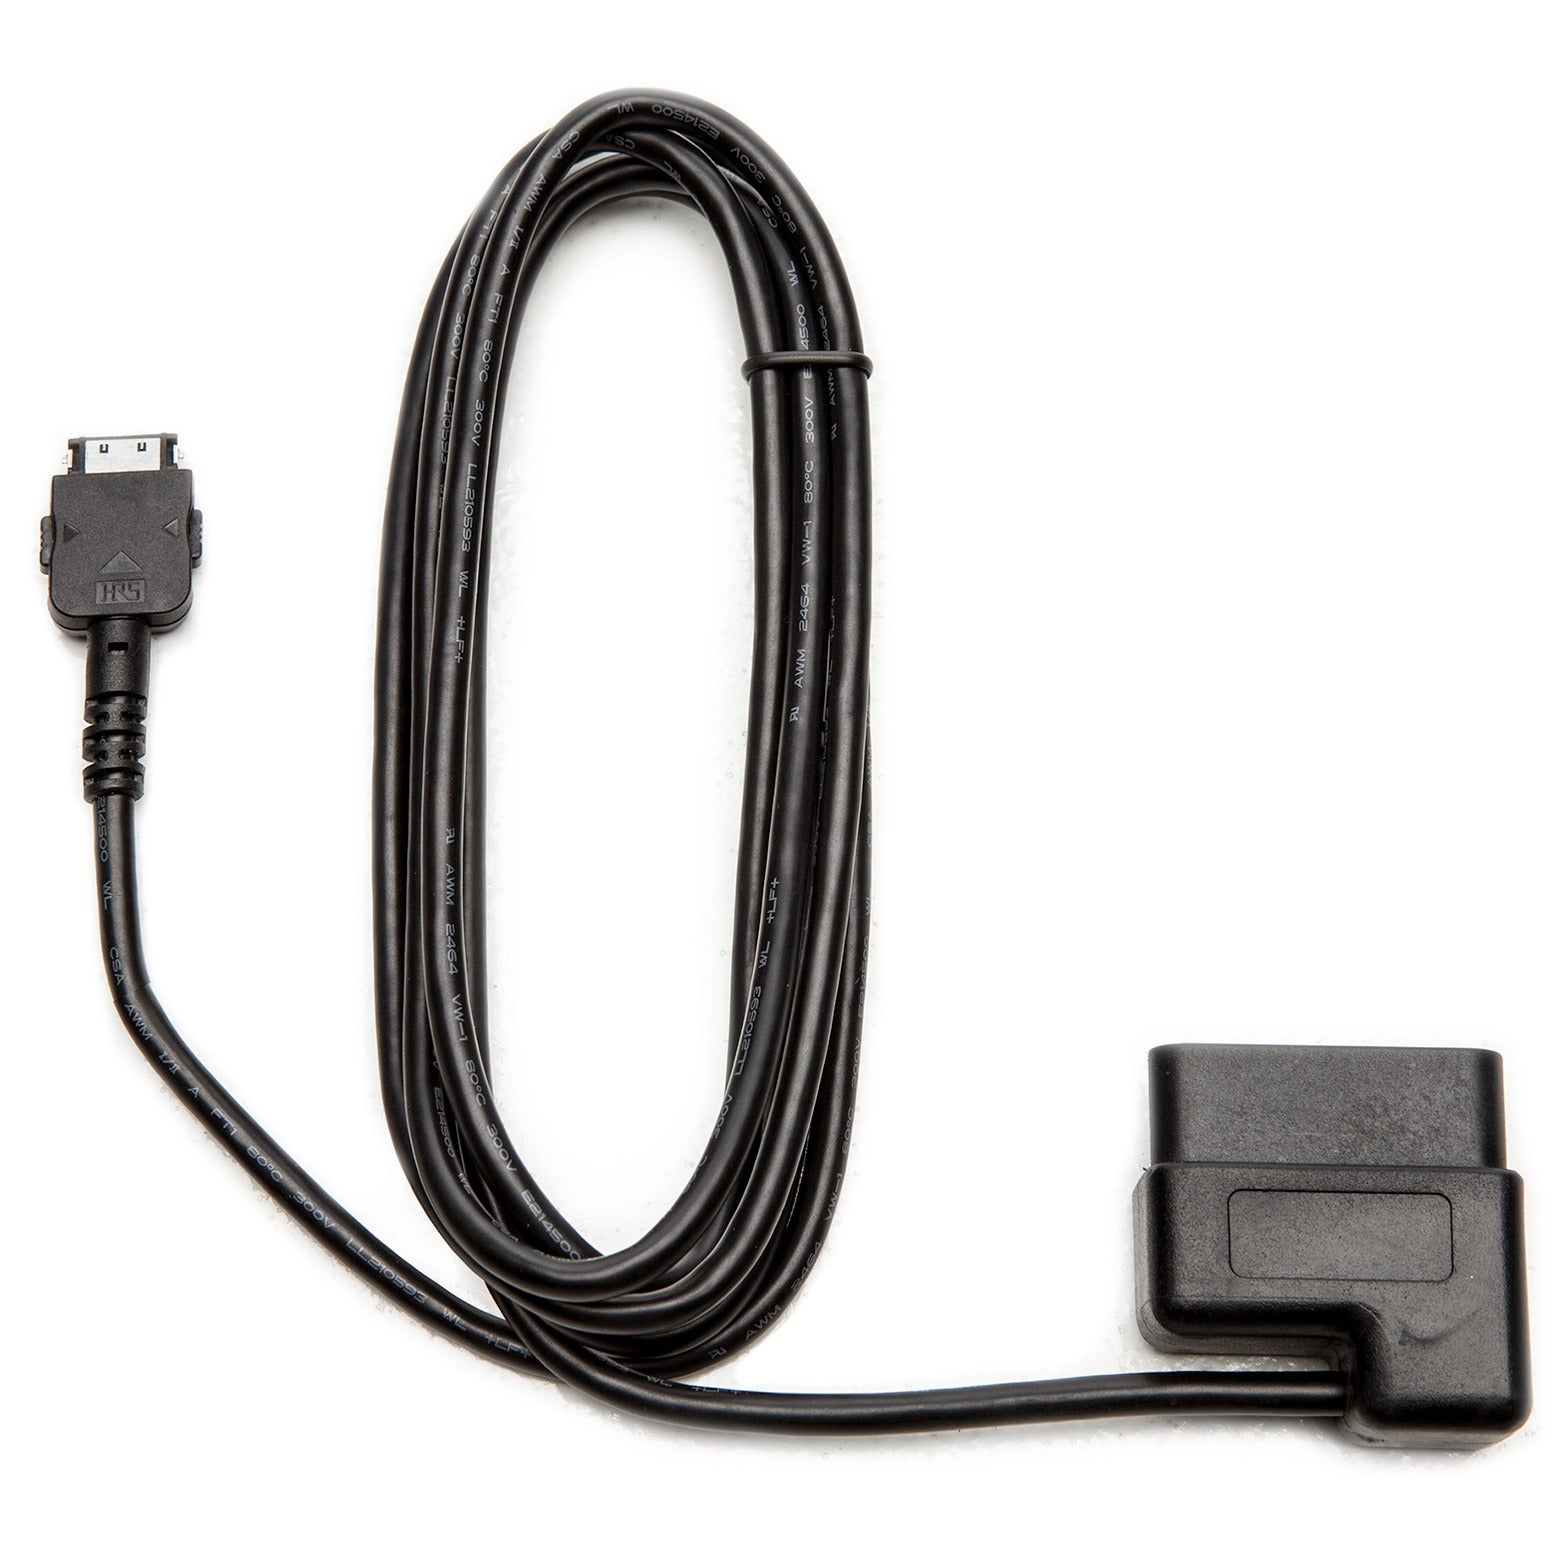 Cobb AccessPORT AP3 Detachable OBDII Cable